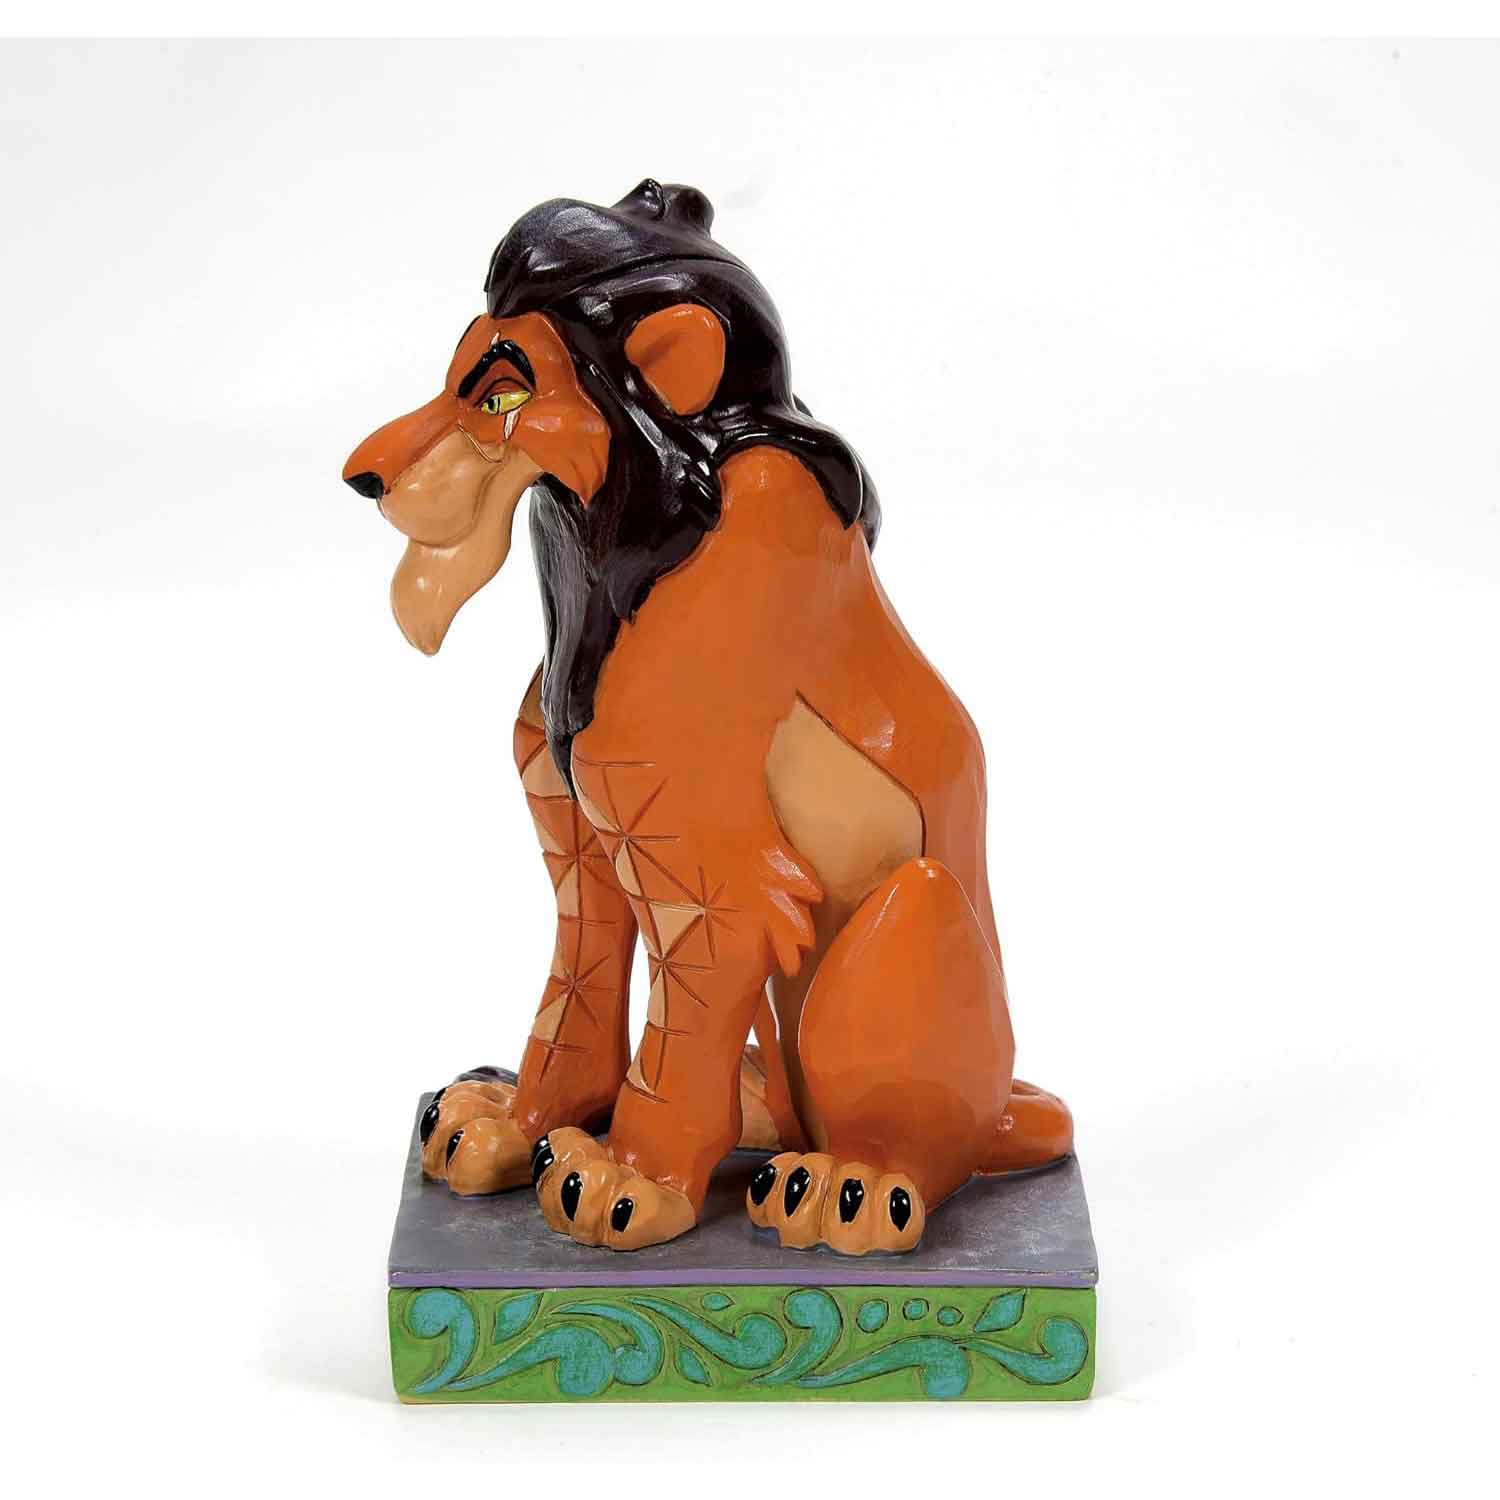 Scar-Figur-von-König-der-Löwen-Disney-Traditions-by-Jim-Shore-berlindeluxe-loewe-schwarzes-haar